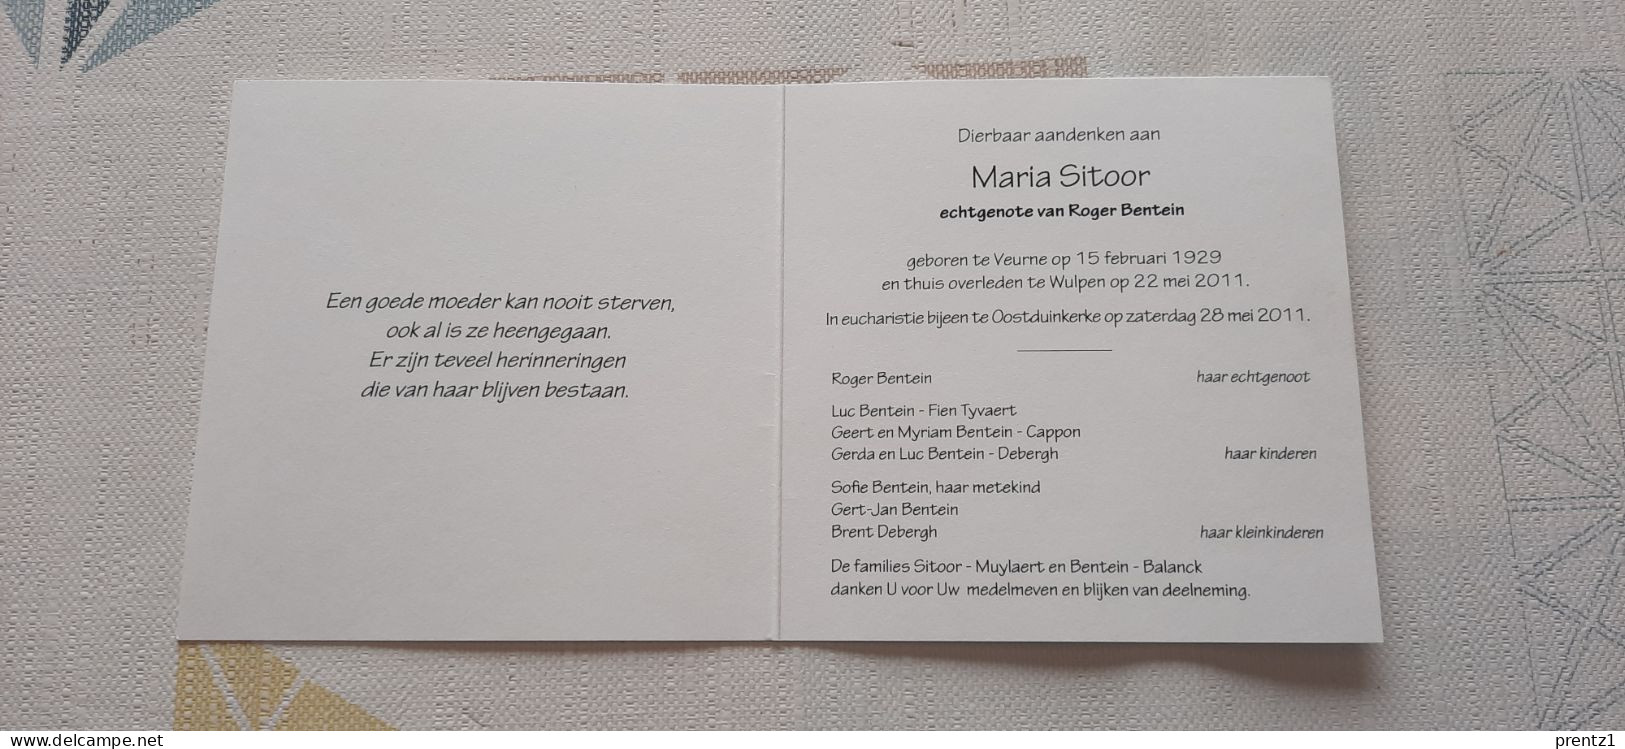 Maria Sitoor Geb. Veurne 15/02/1929 - Getr. R. Bentein - Gest. Wulpen 22/05/2011 - Devotion Images